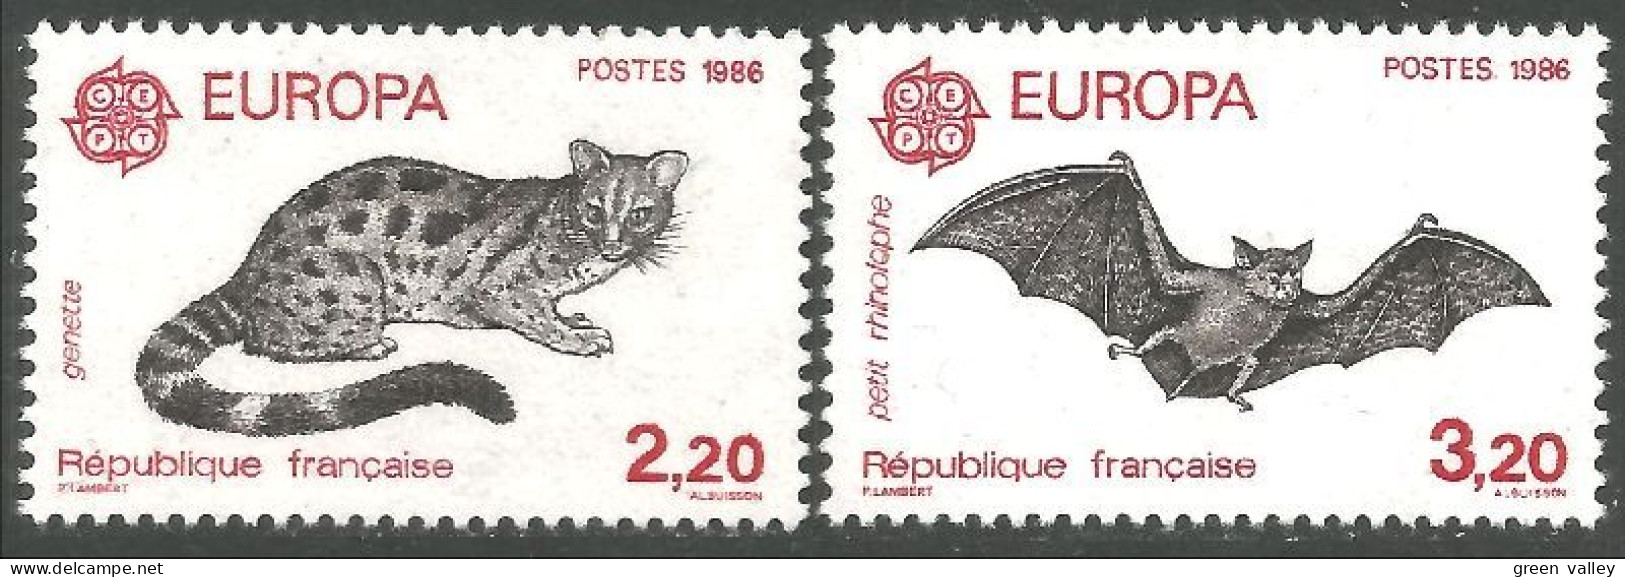 EU86-10a EUROPA CEPT 1986 France Chauve-souris Genette Bat MNH ** Neuf SC - 1986